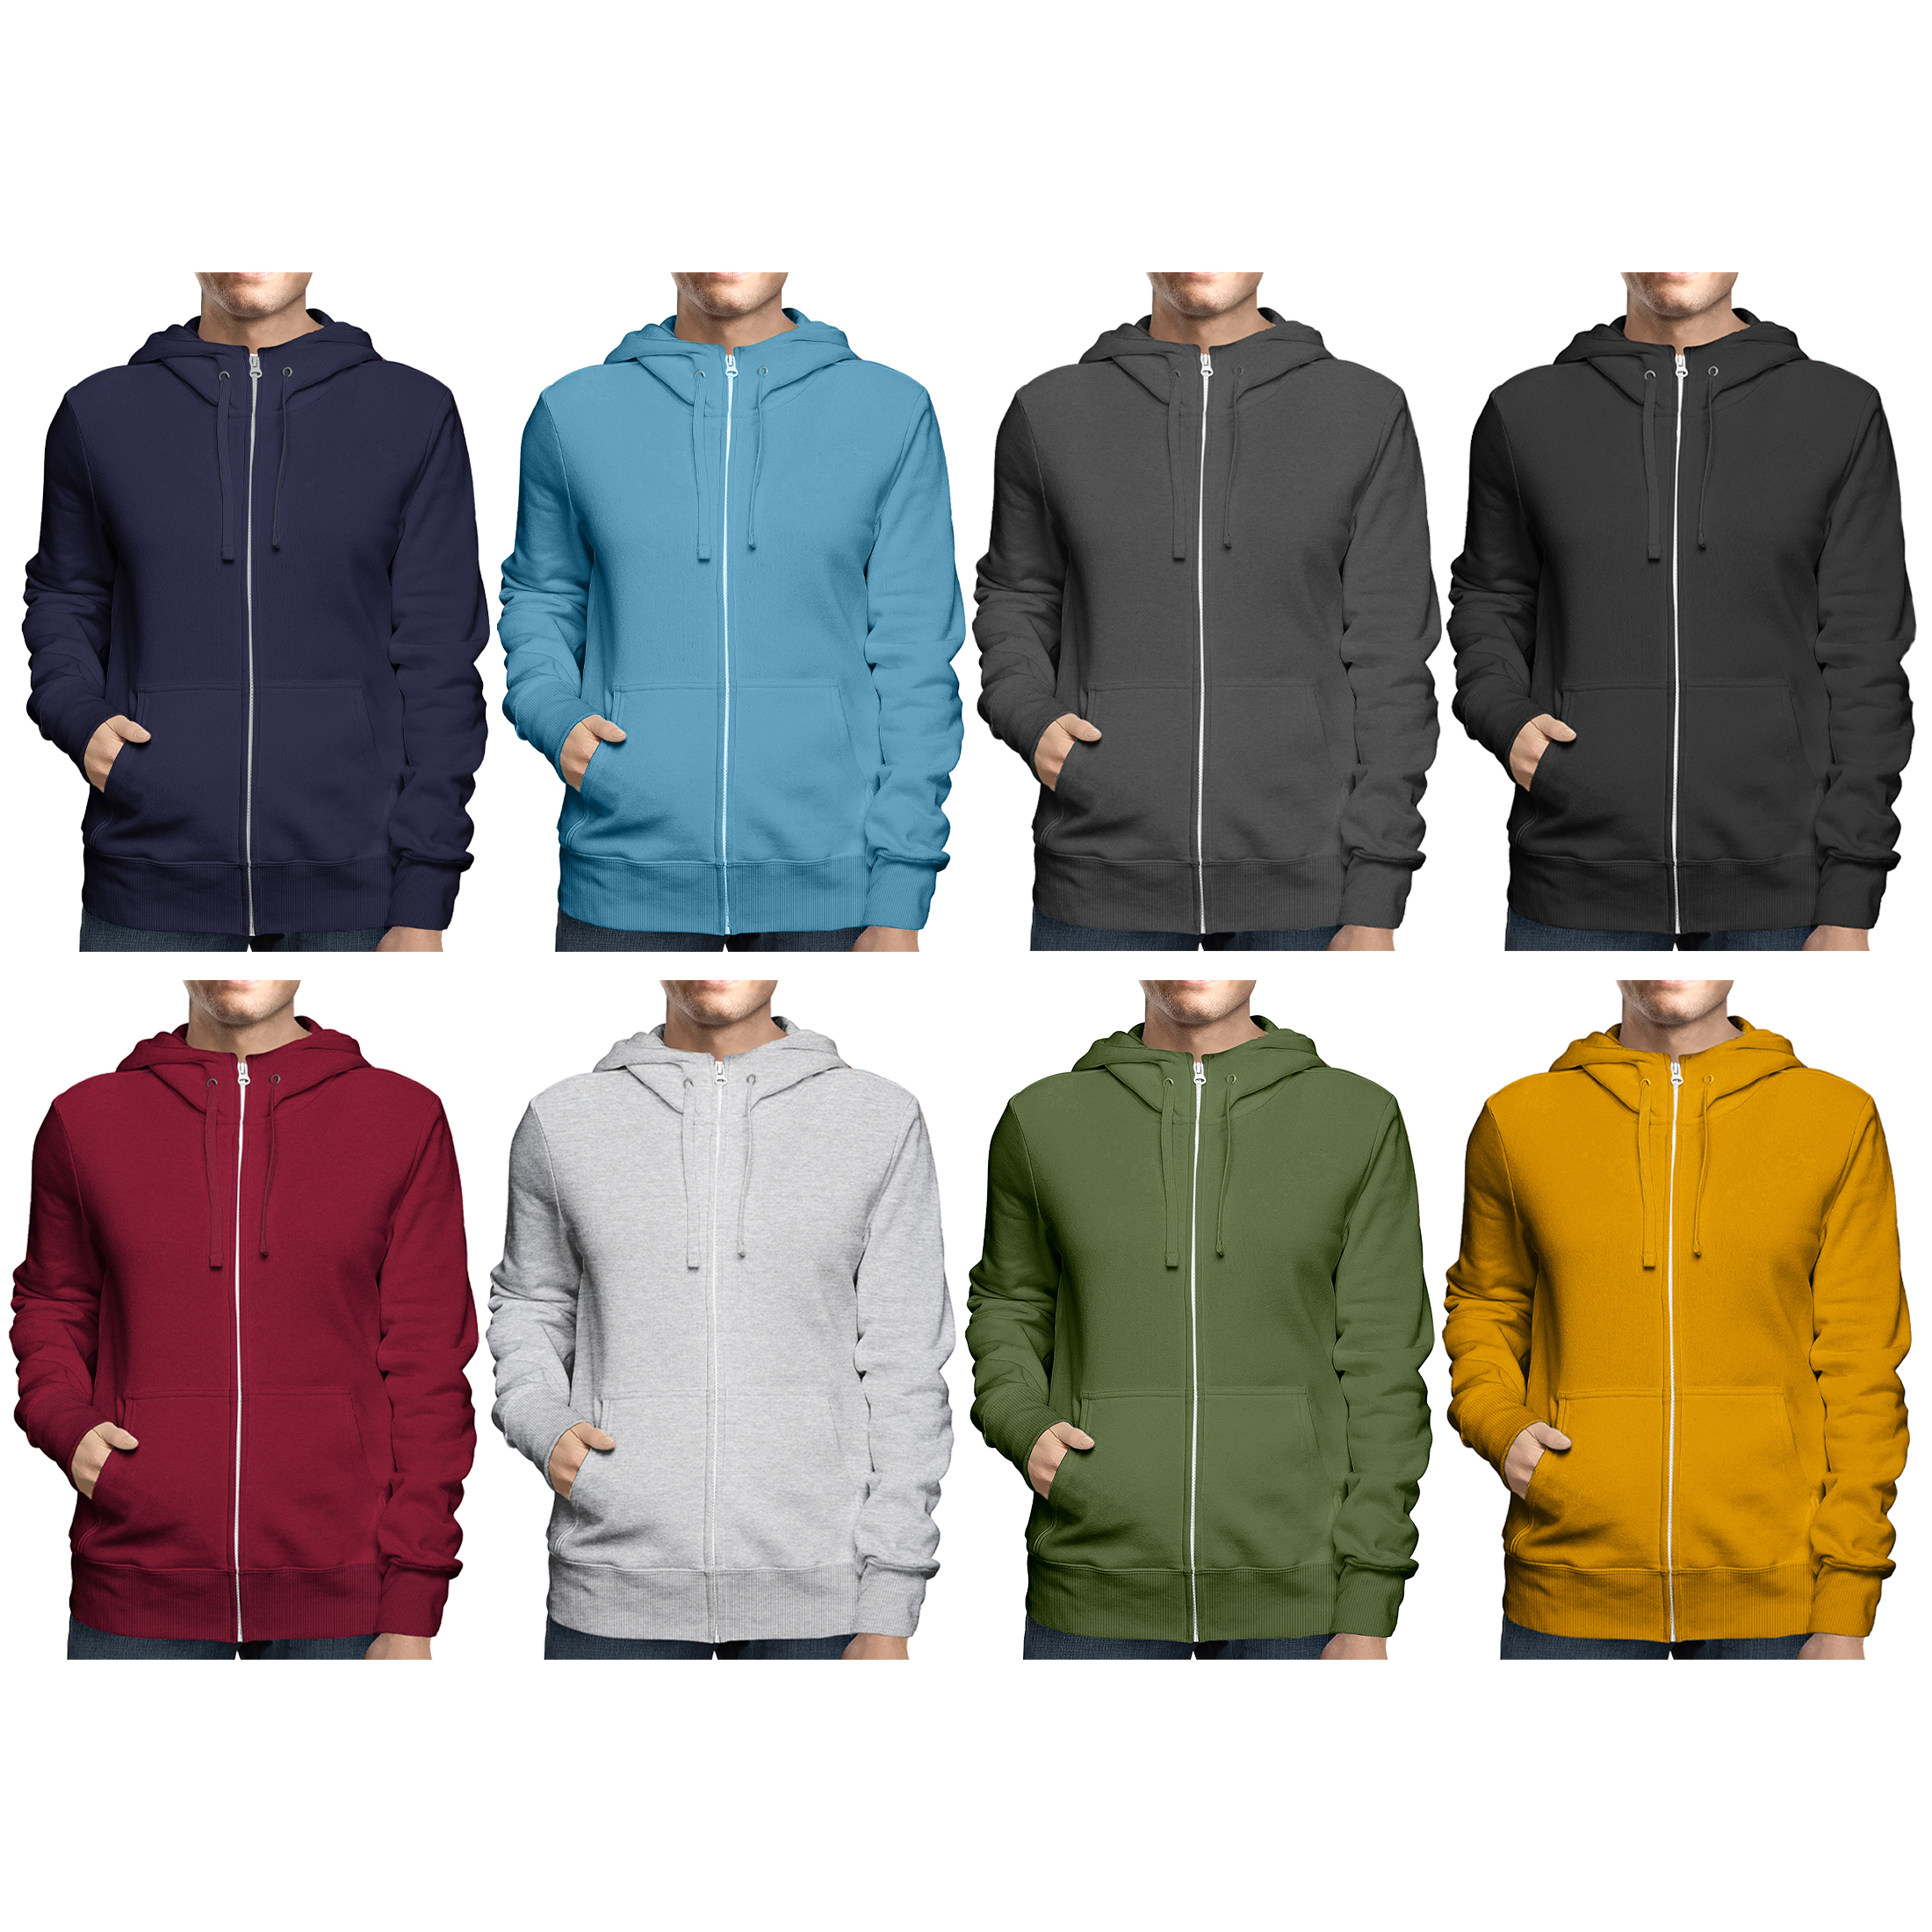 2-Pack: Men's Full Zip Up Fleece-Lined Hoodie Sweatshirt (Big & Tall Size Available) - Black & Gray, Medium